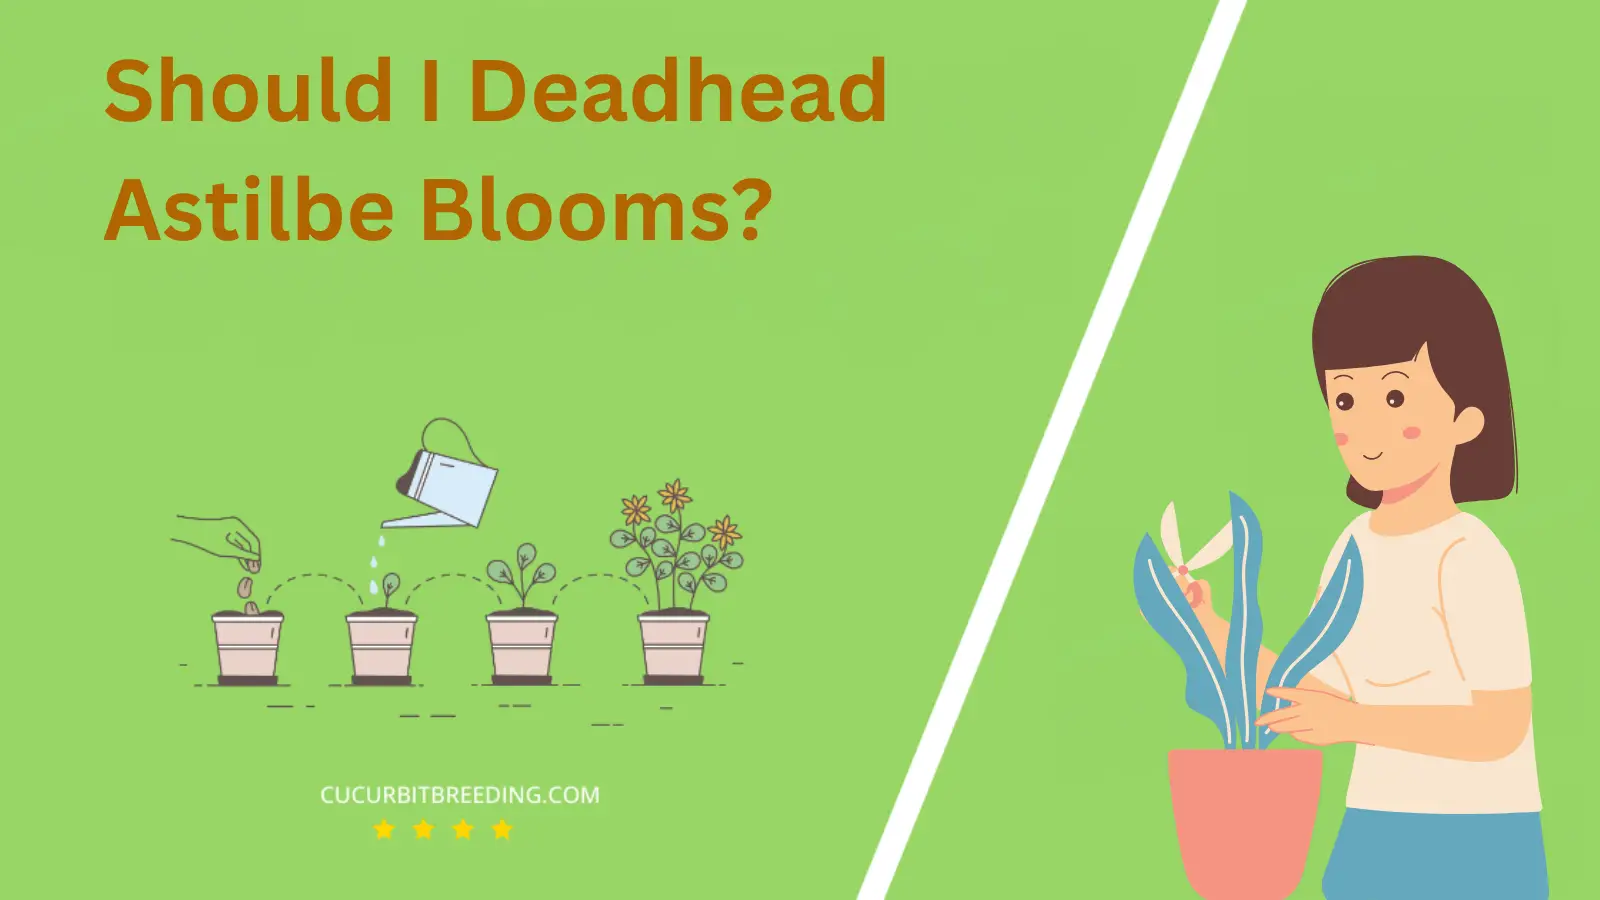 Should I Deadhead Astilbe Blooms?